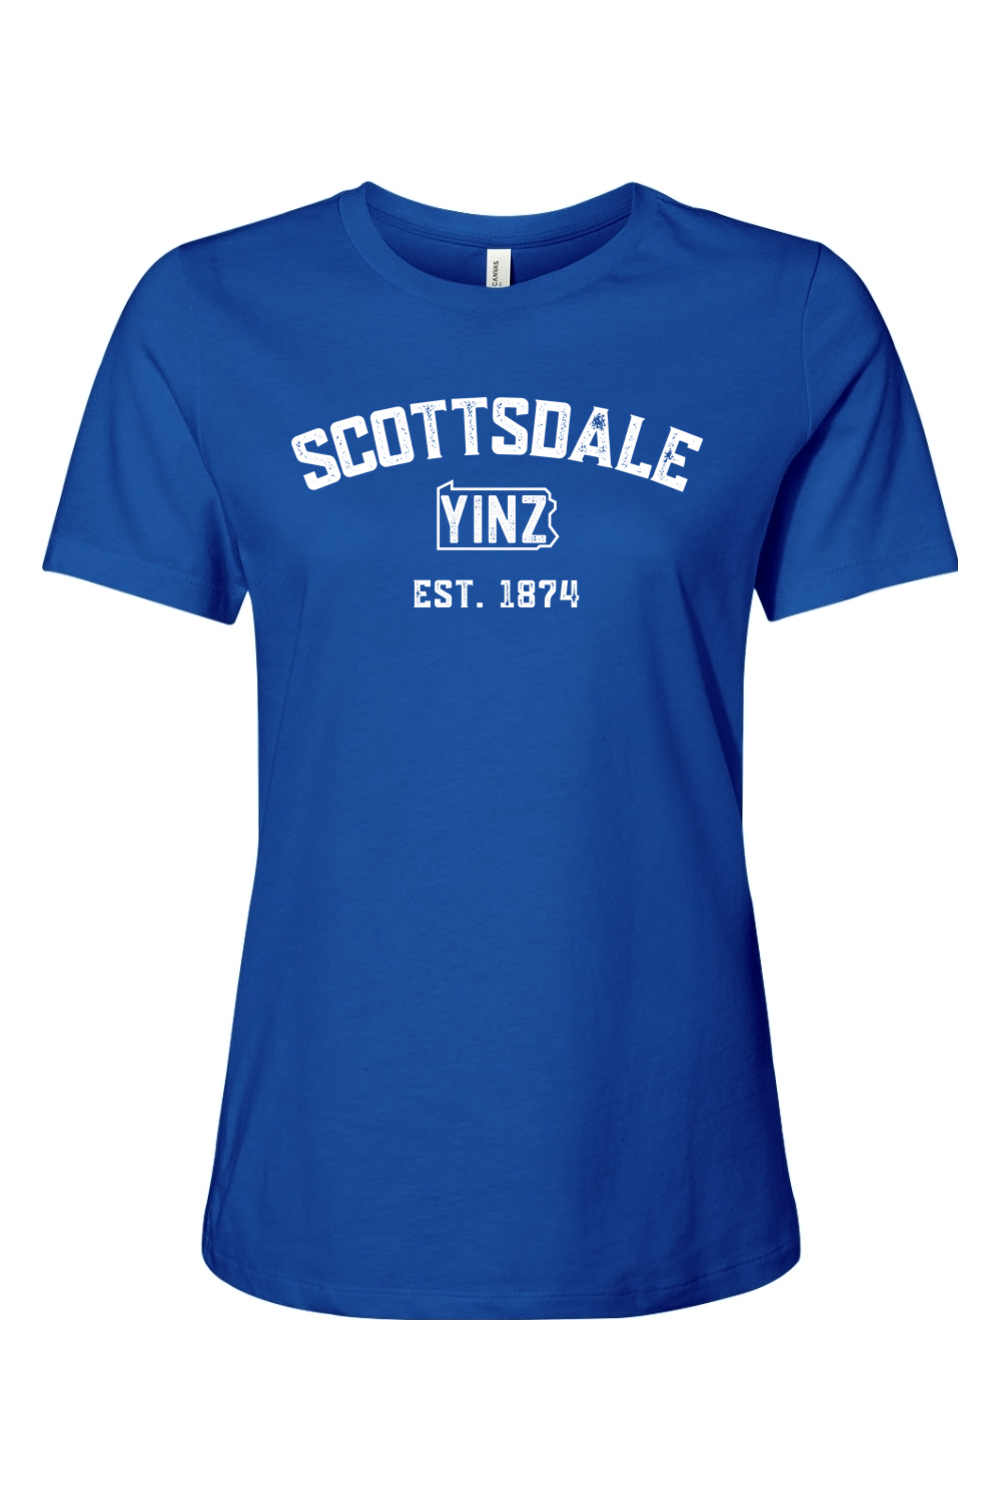 Scottsdale Yinzylvania - Ladies Tee - Yinzylvania